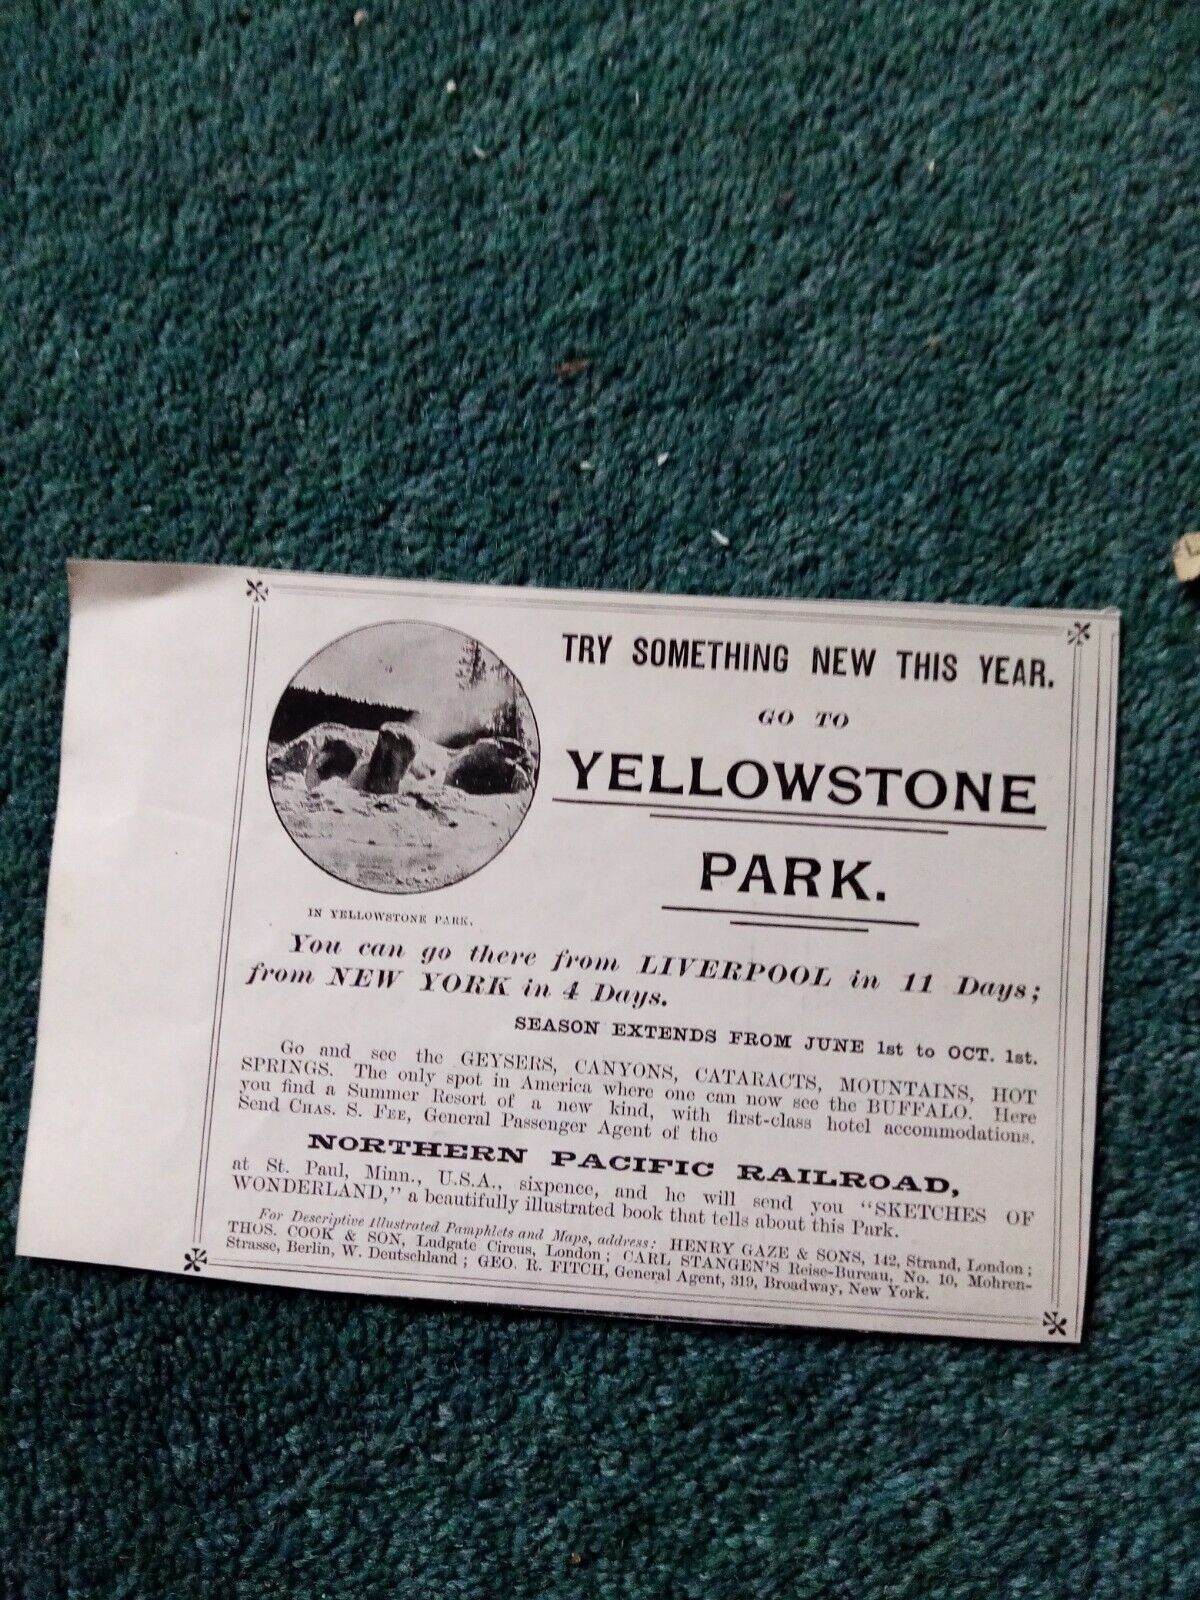 Kvc25 Ephemera 1895 advert yellowstone Park new York 